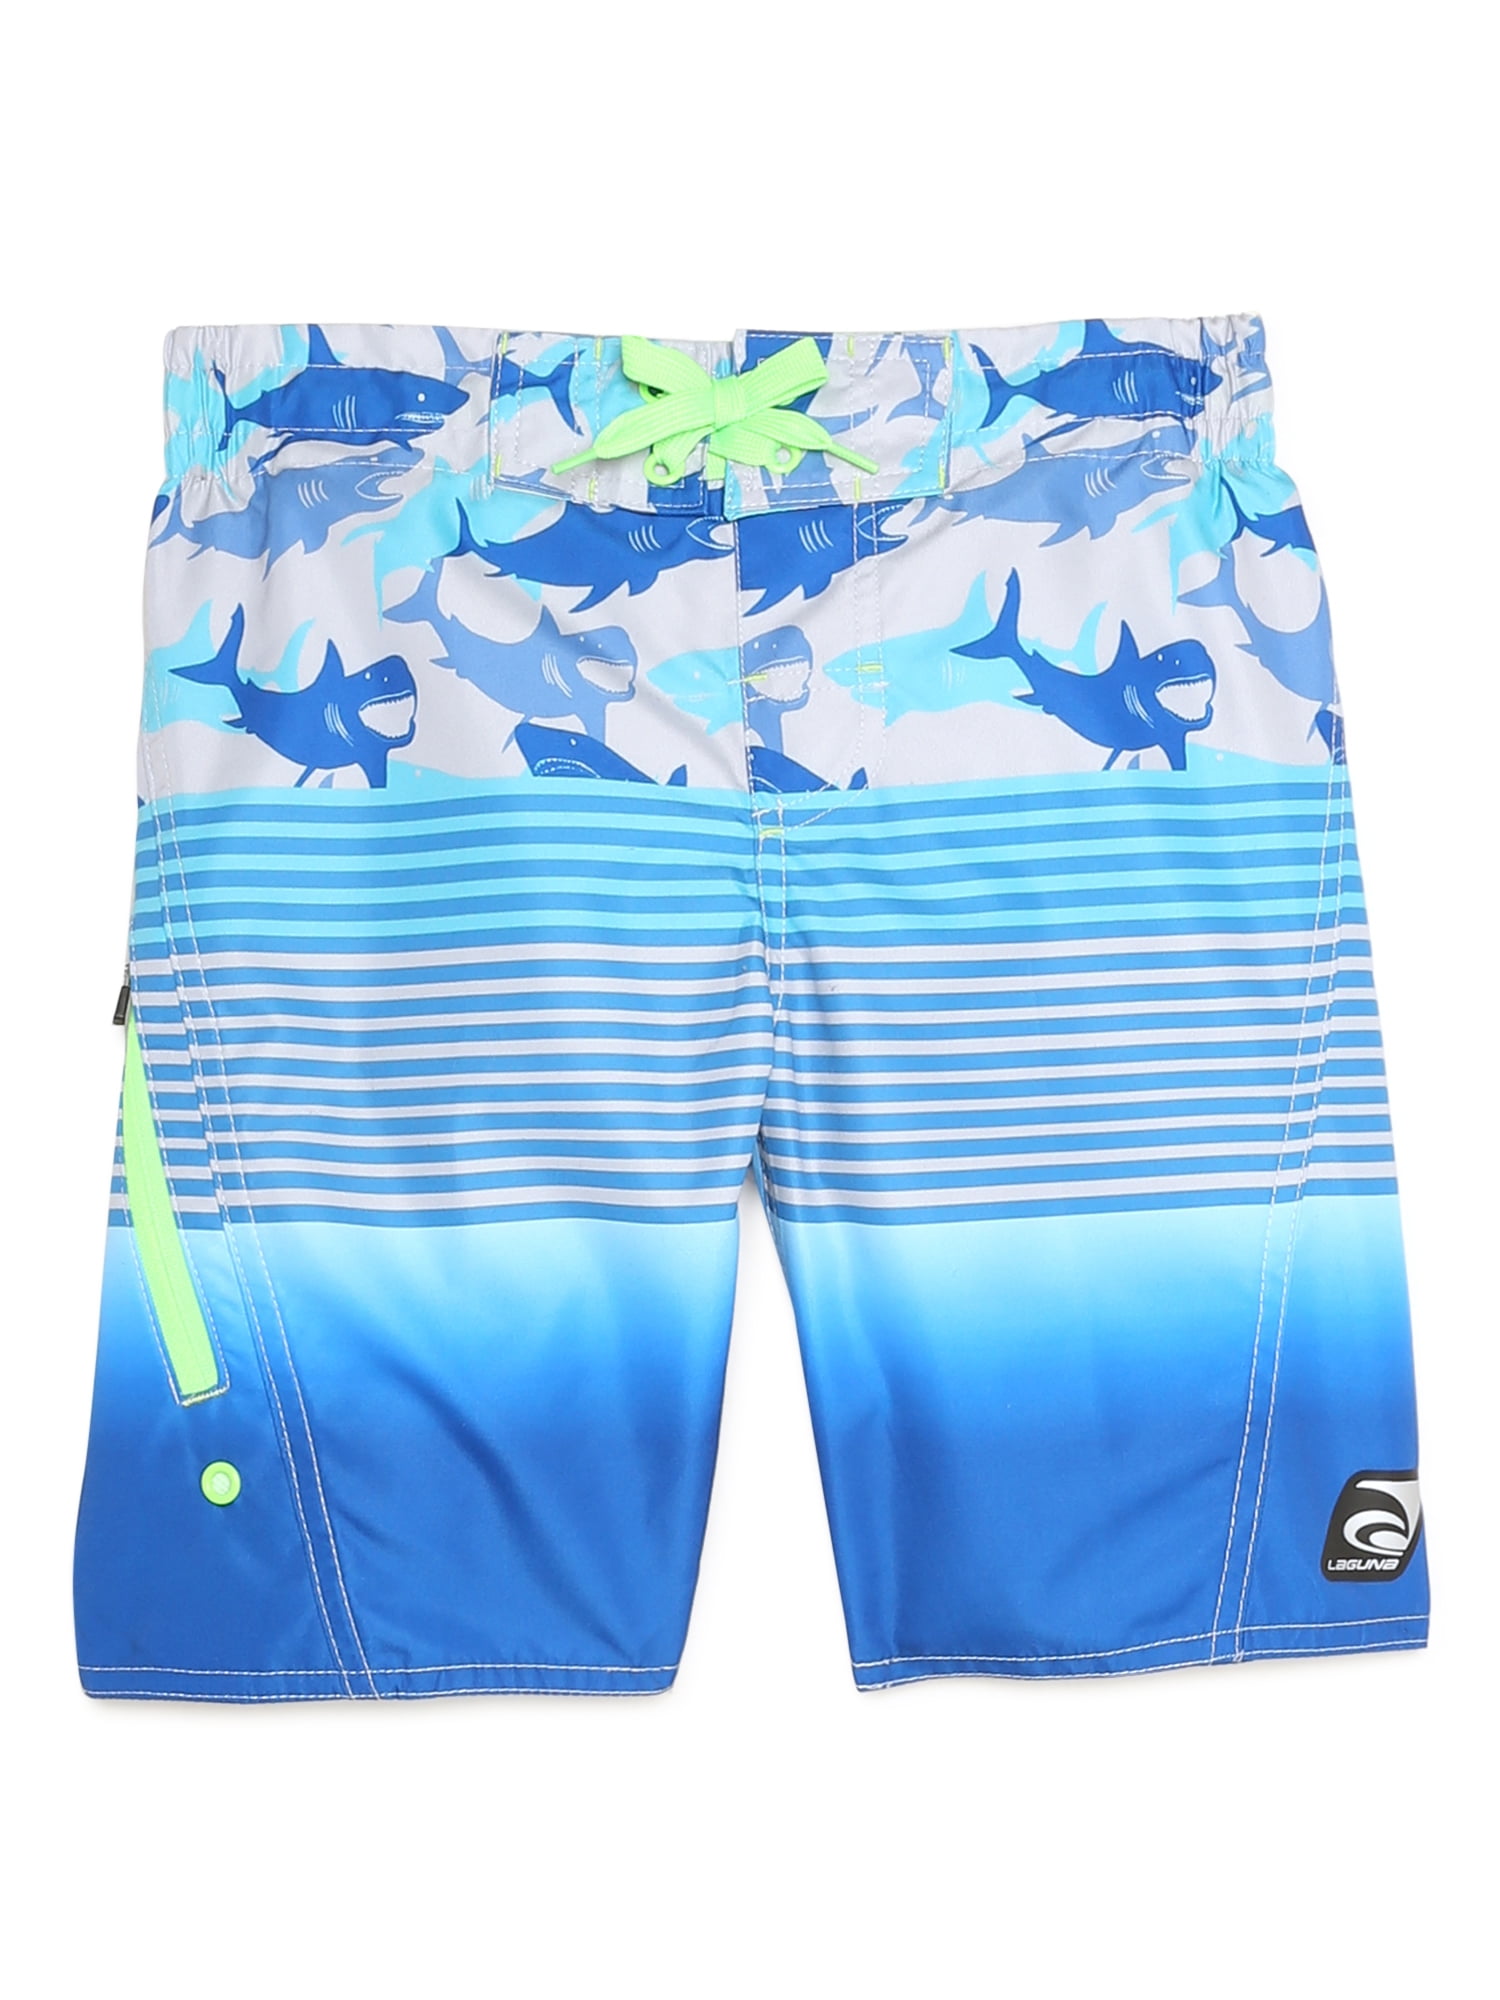 Creative Baby Boys Swimming Trunks Drawstring Shark Design Grey Beach Shorts 